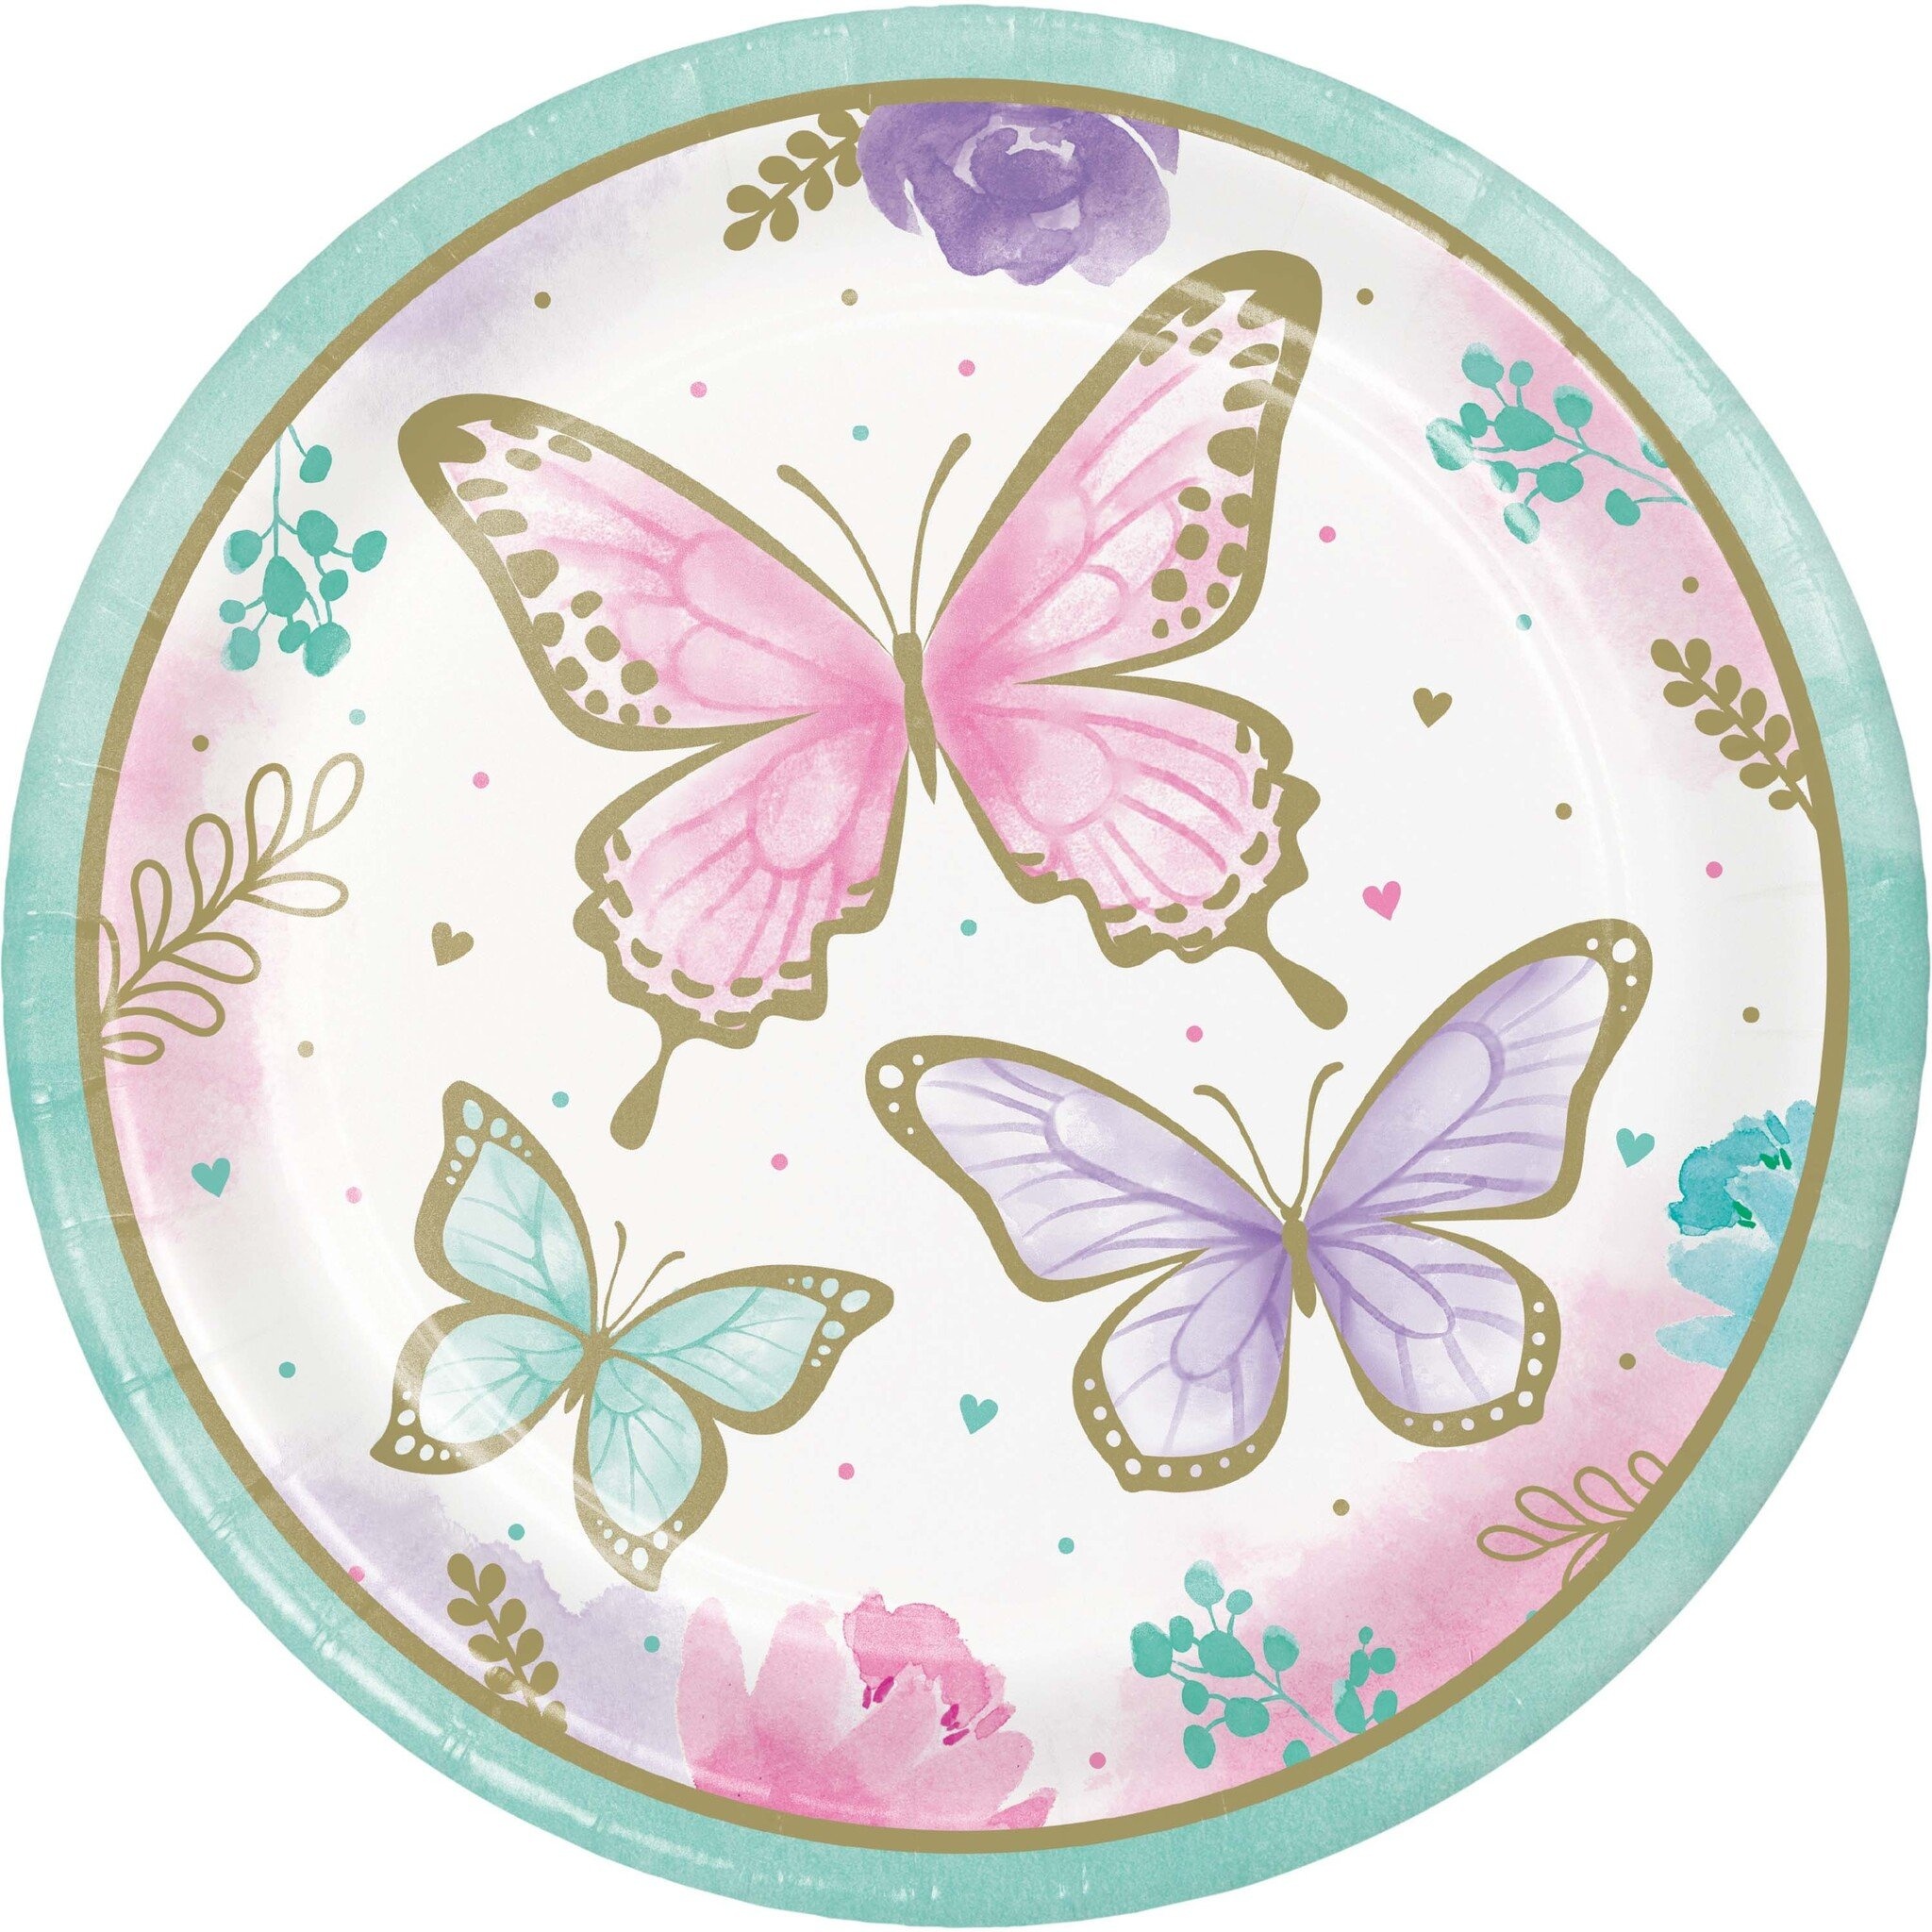 Schmetterling Dekoration - Partywinkel